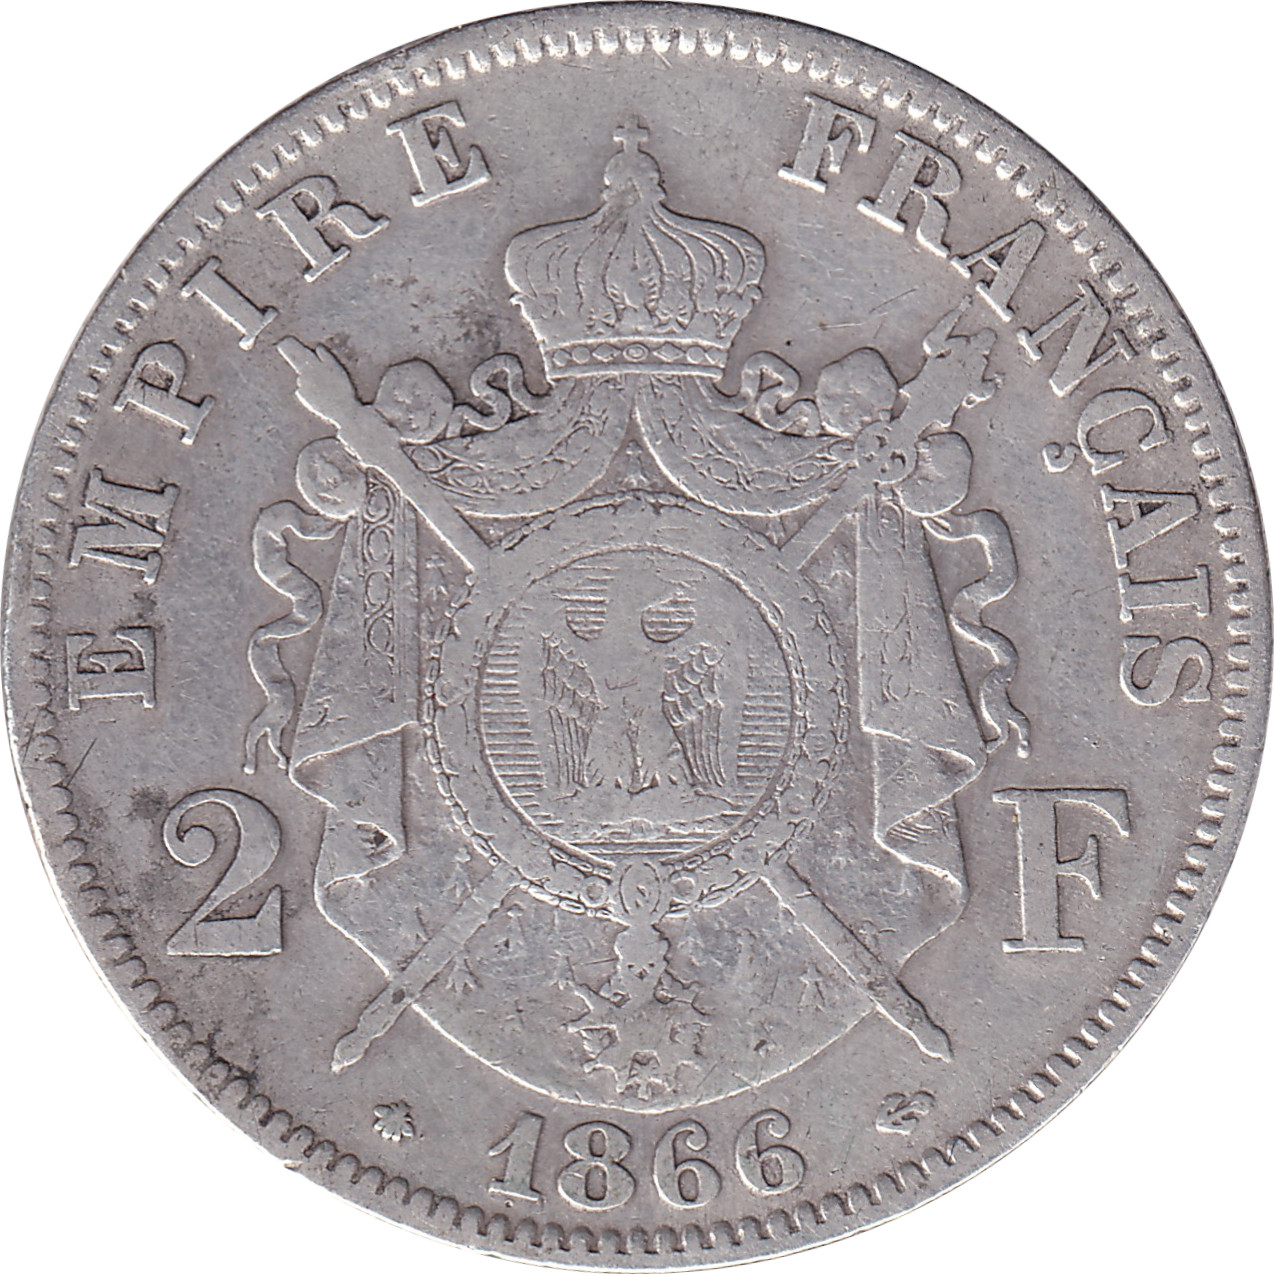 2 francs - Napoléon III - Laureate head